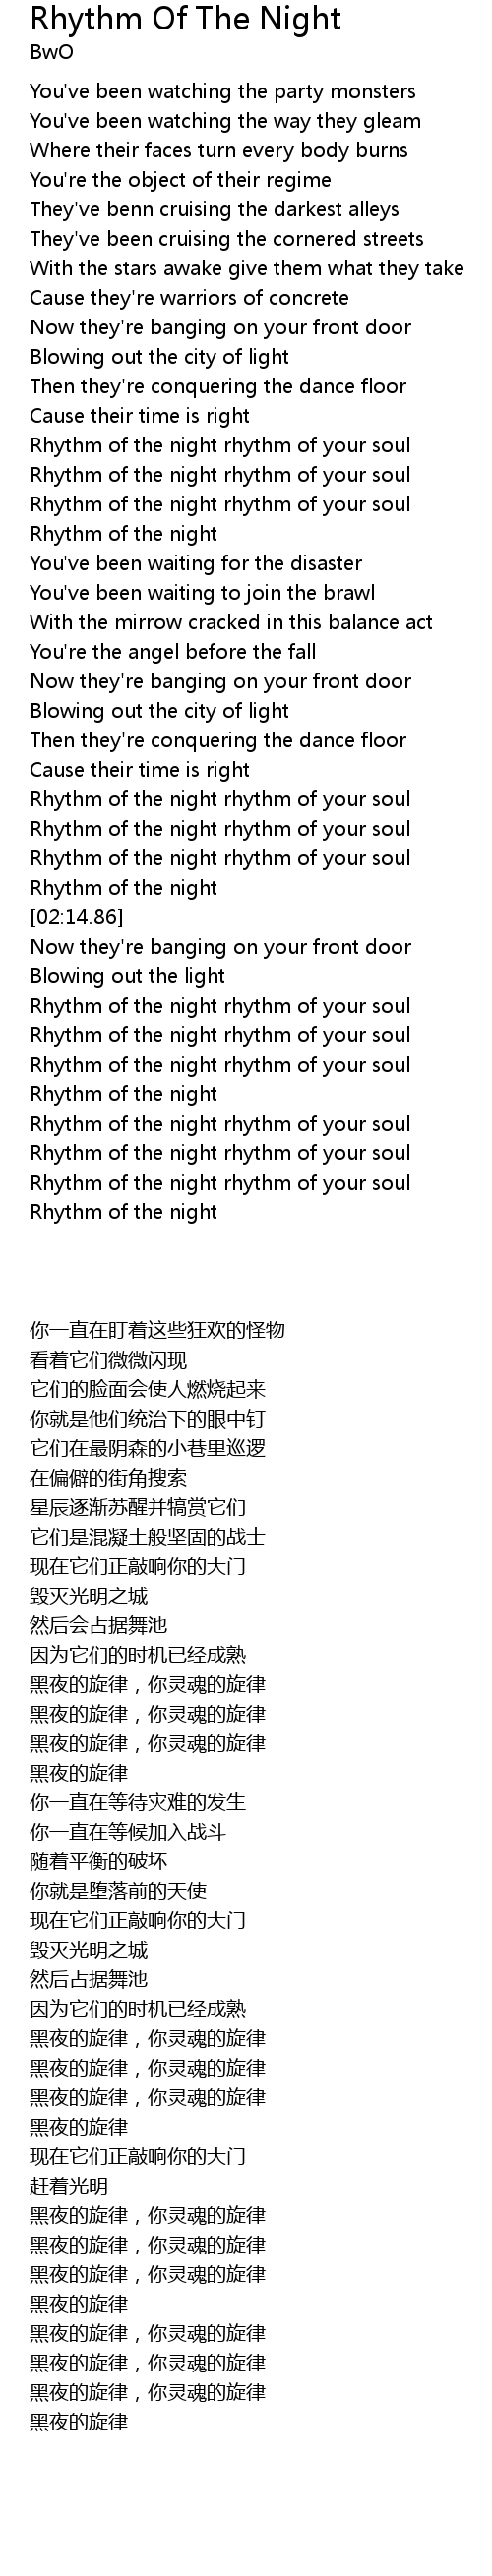 Rhythm Of The Night Lyrics Follow Lyrics The vocals for this song were performed by giovanna bersola. follow lyrics